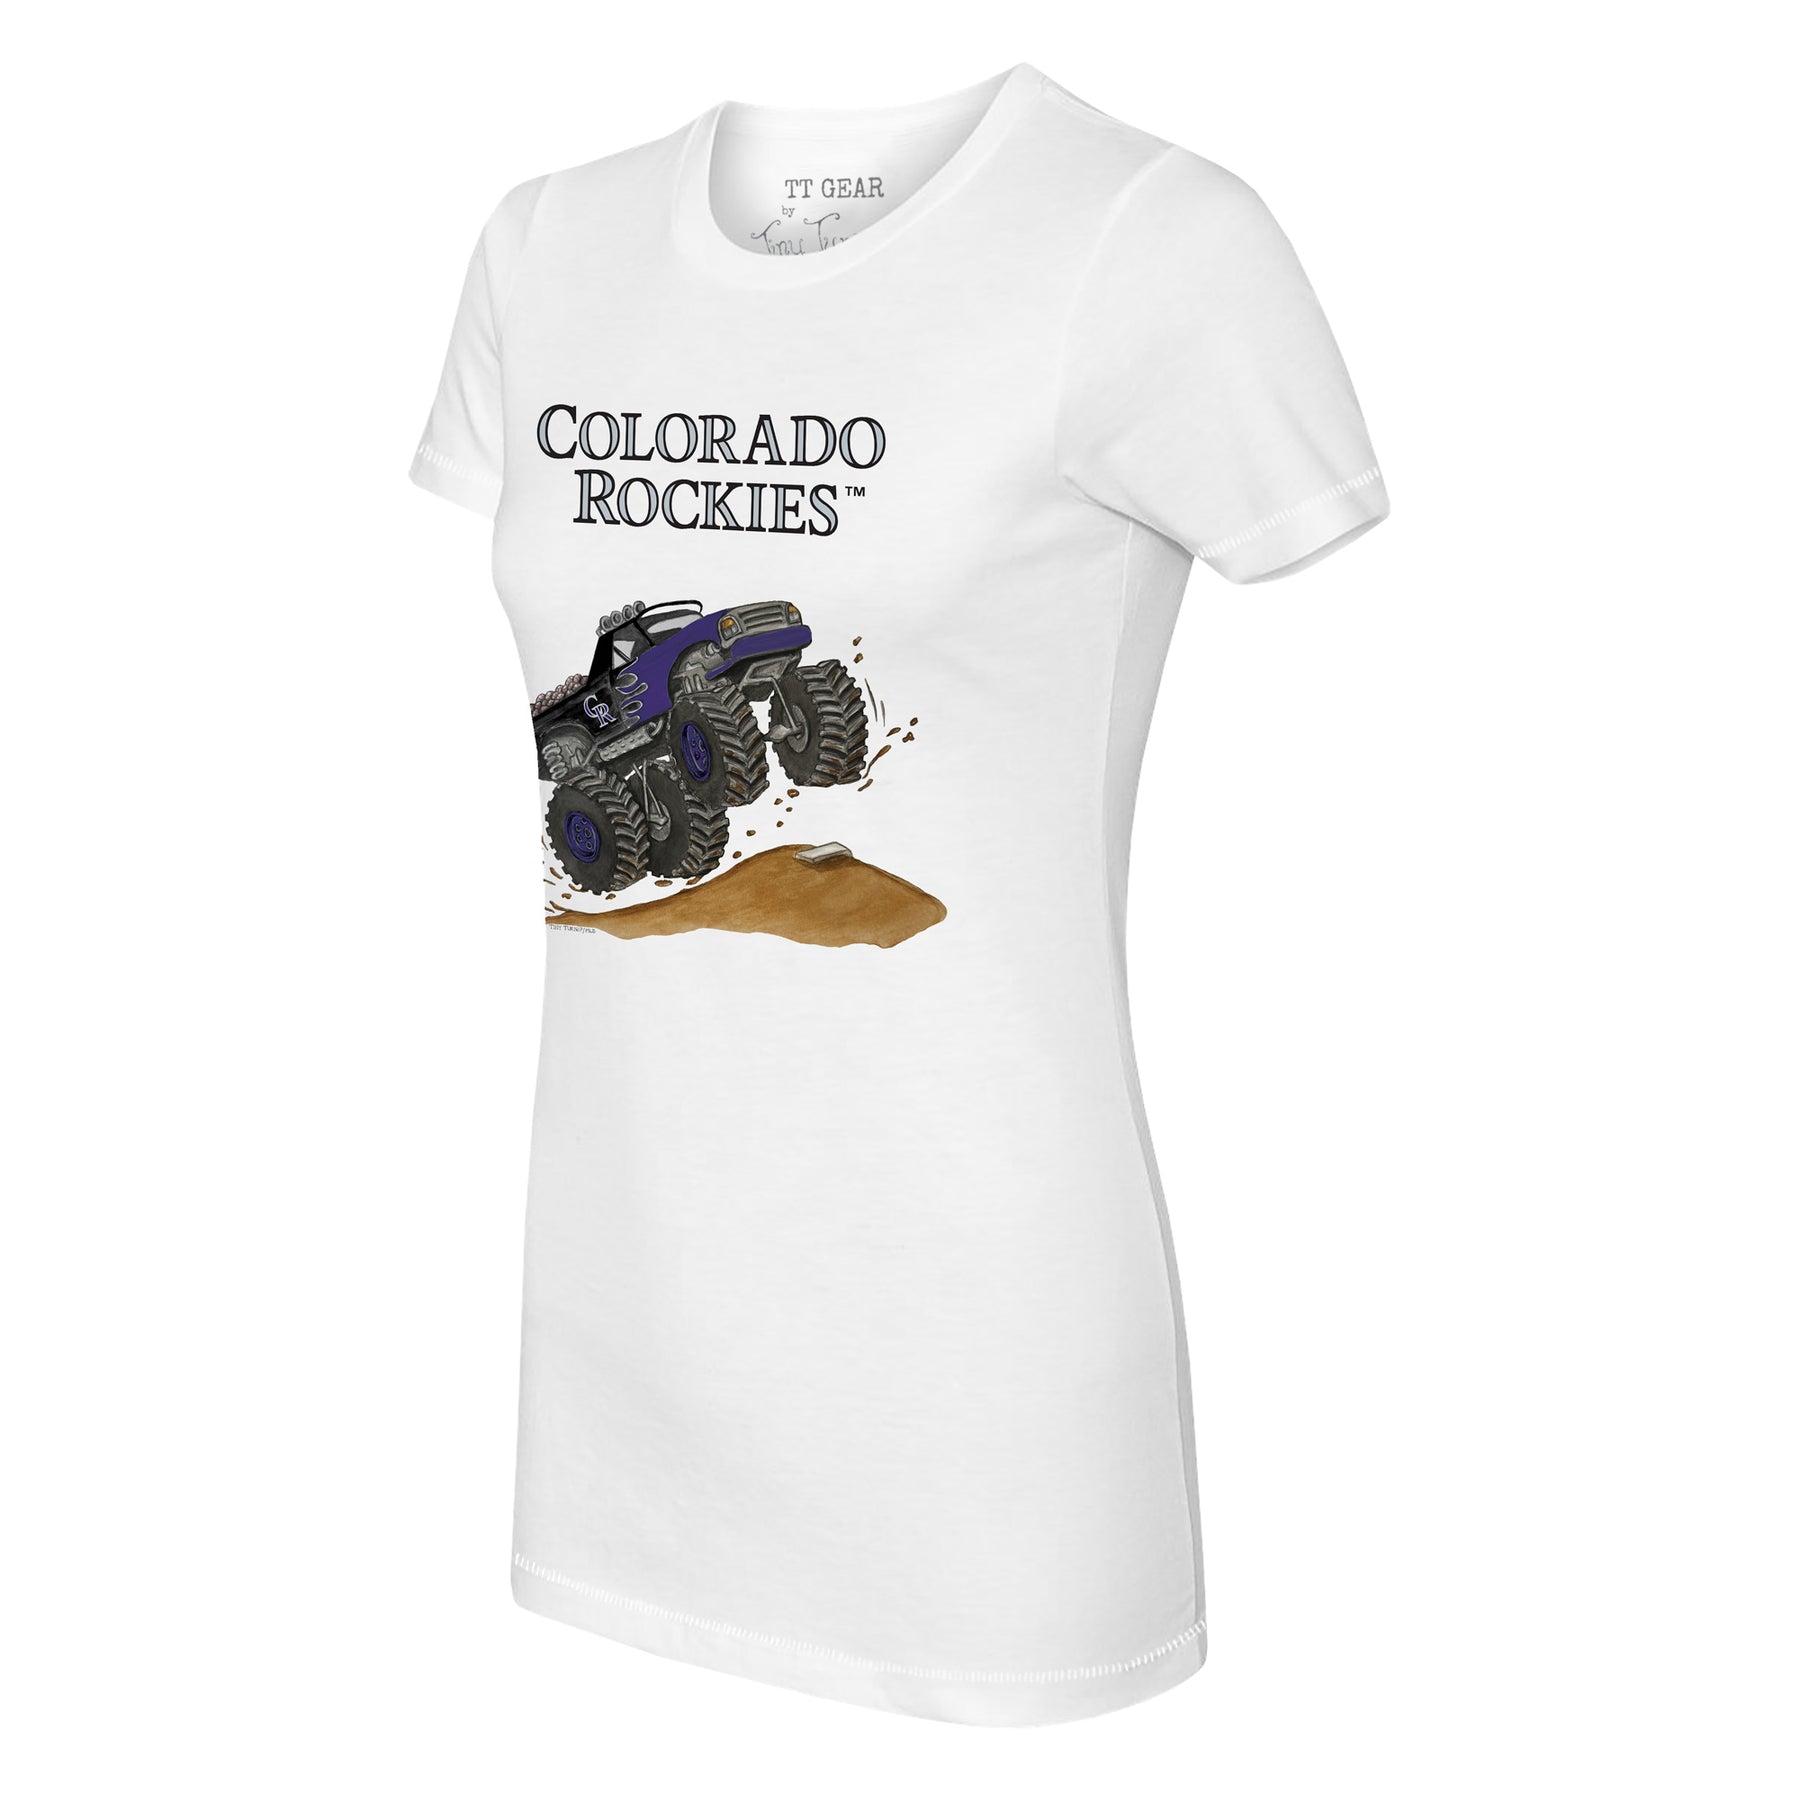 Colorado Rockies Monster Truck Tee Shirt